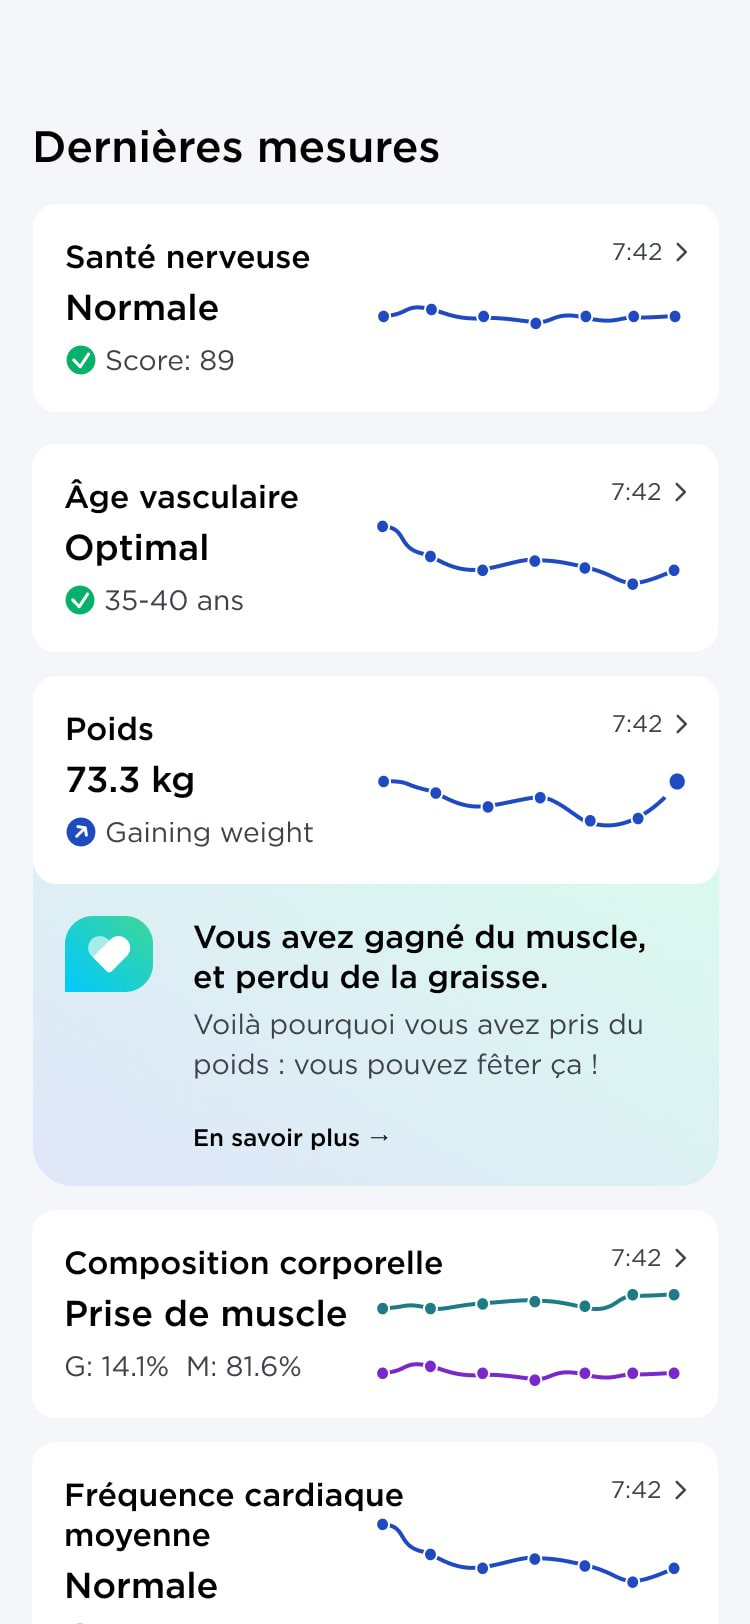 Health Mate App | Withings